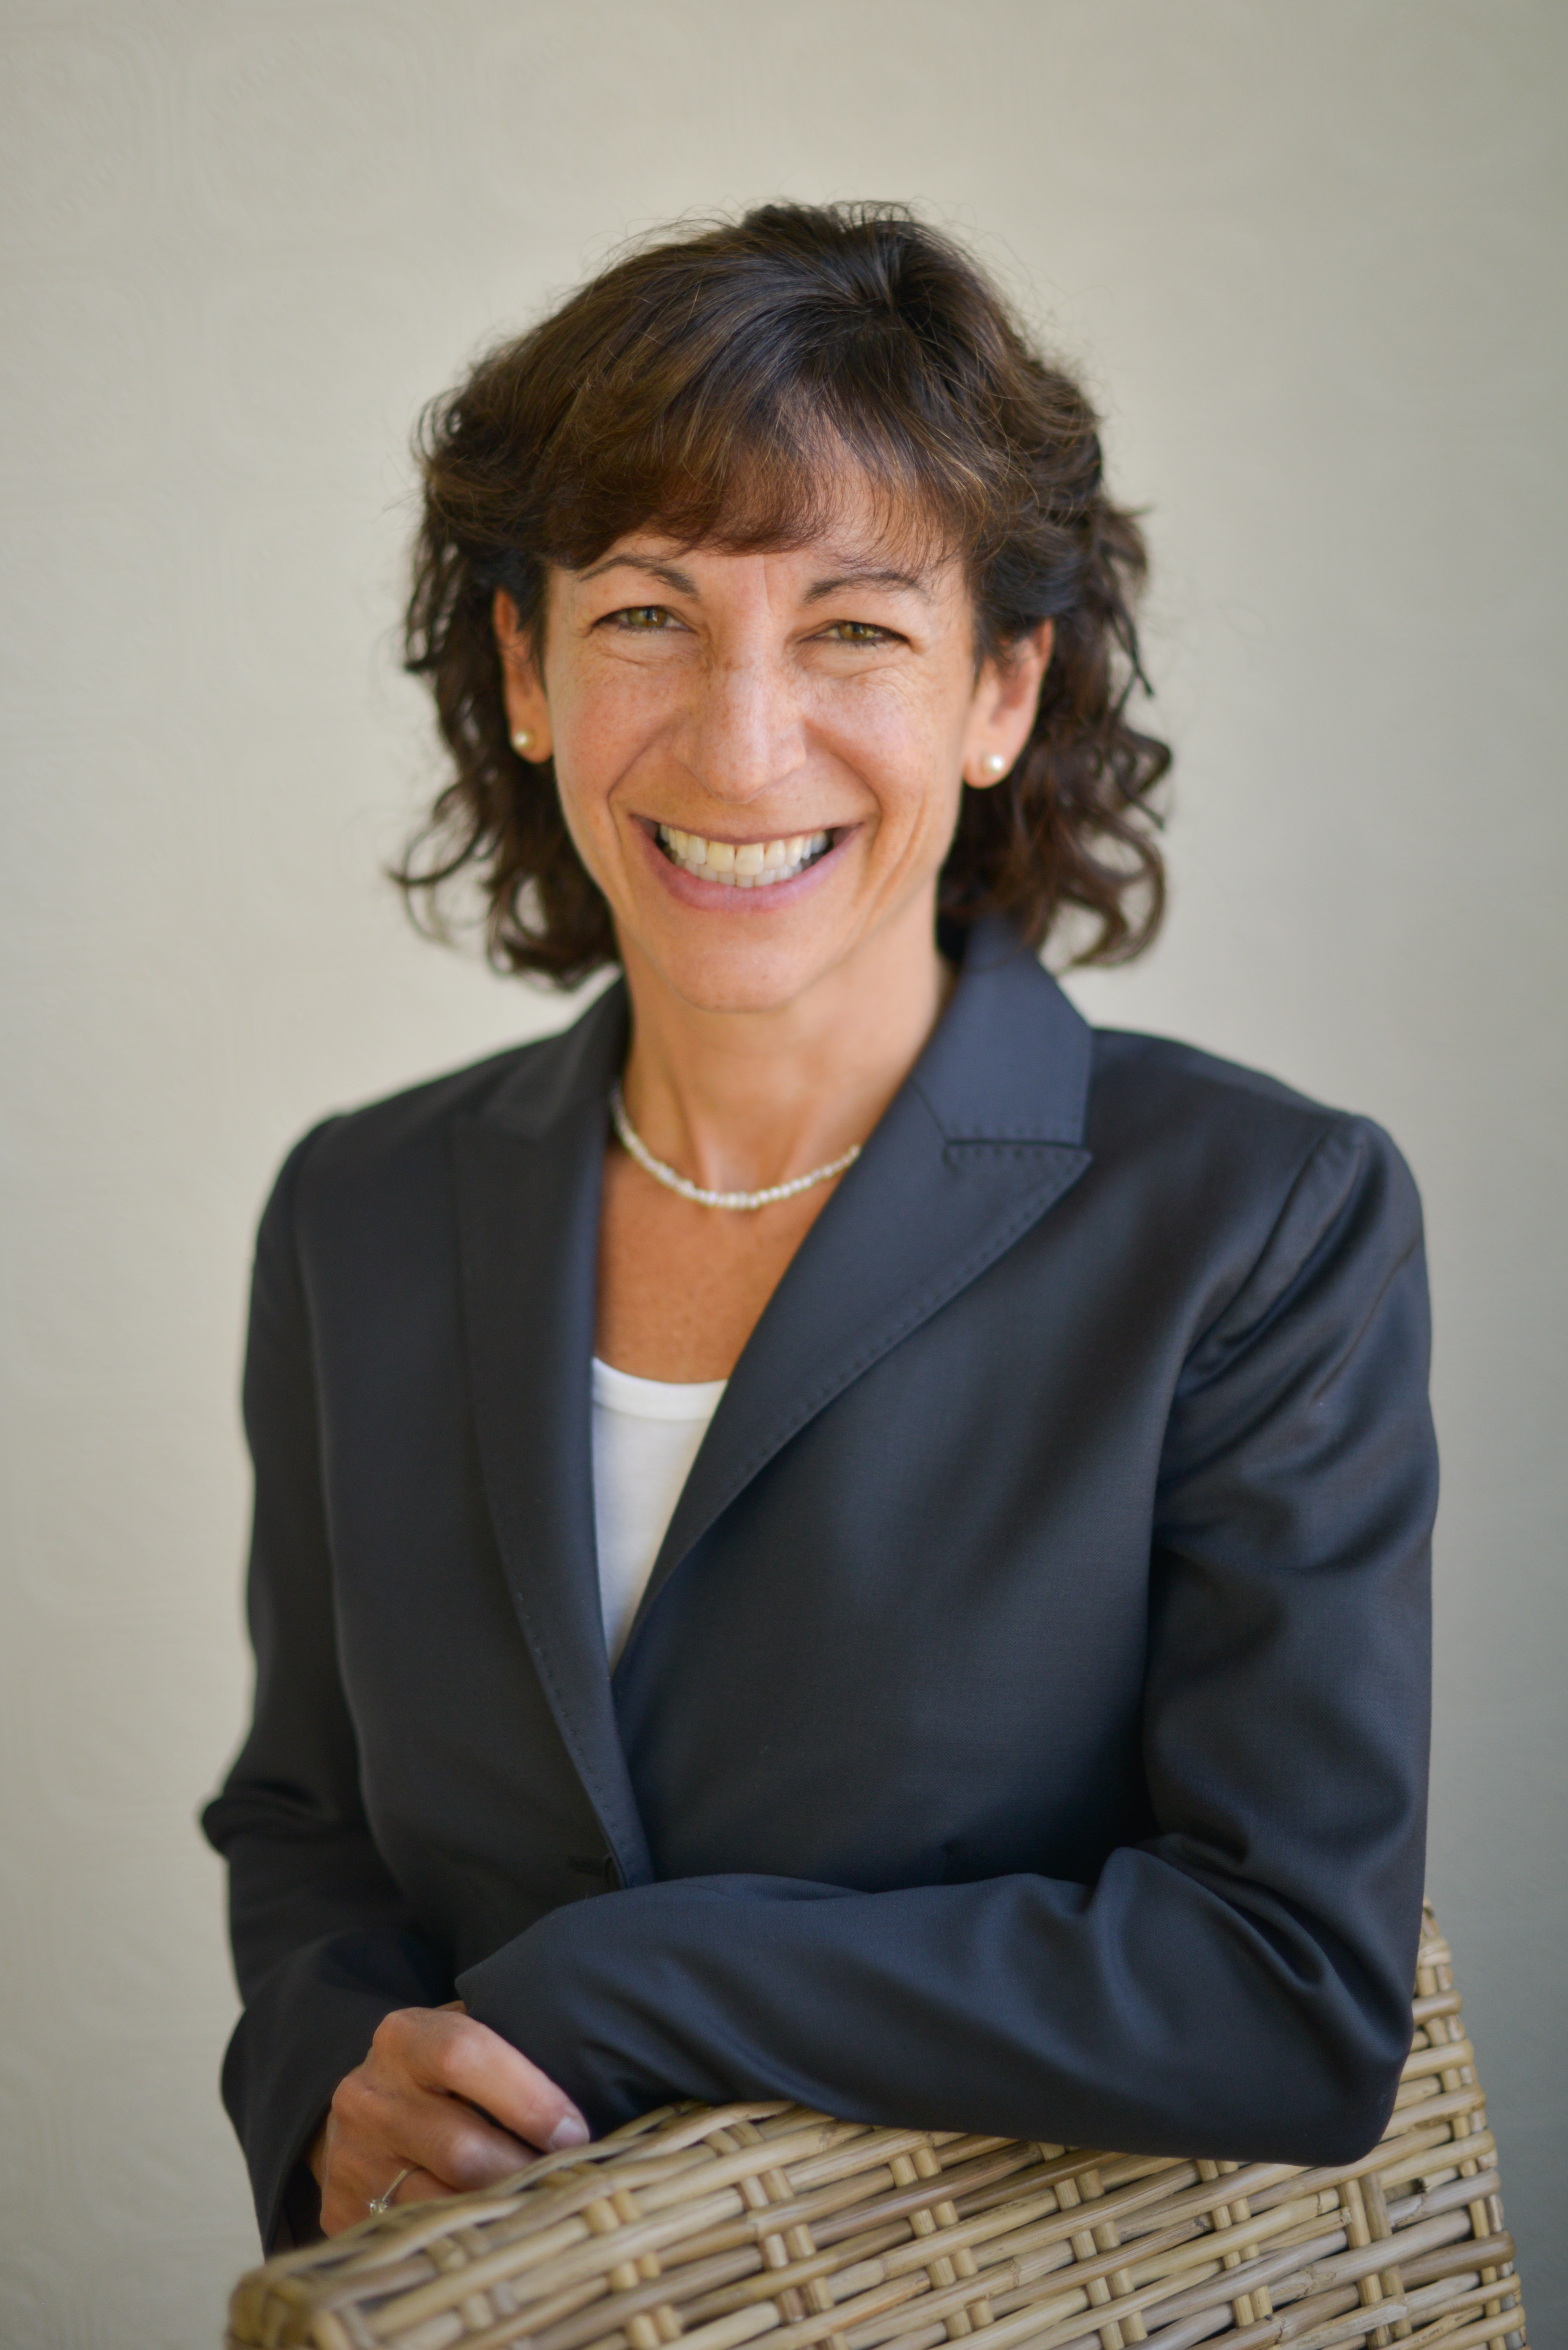 Lisa Chasan-Taber, PhD